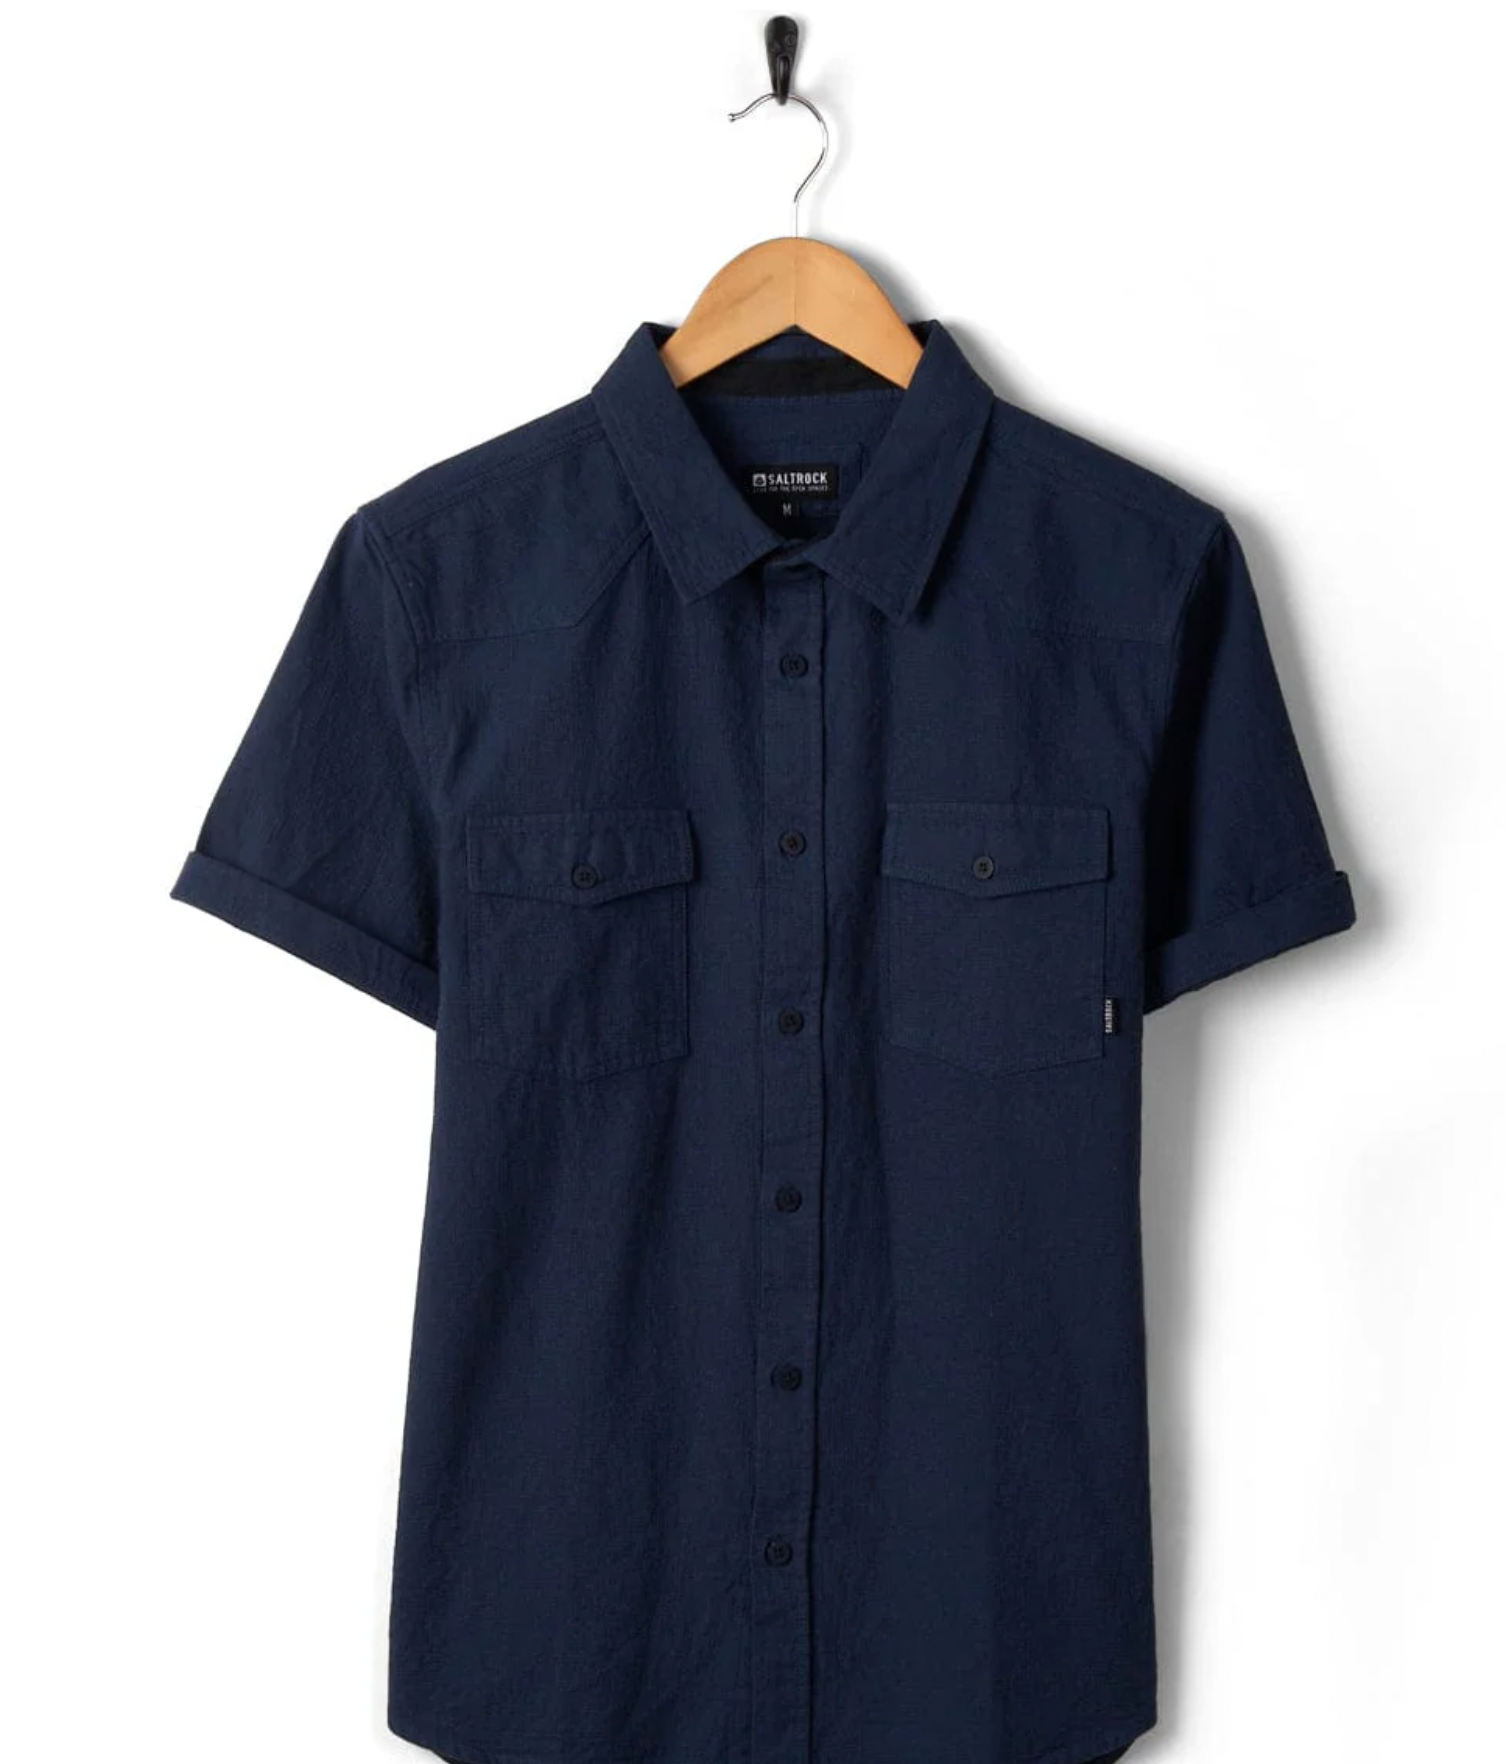 SALTROCK Polperro - Mens Short Sleeve Shirt - Blue